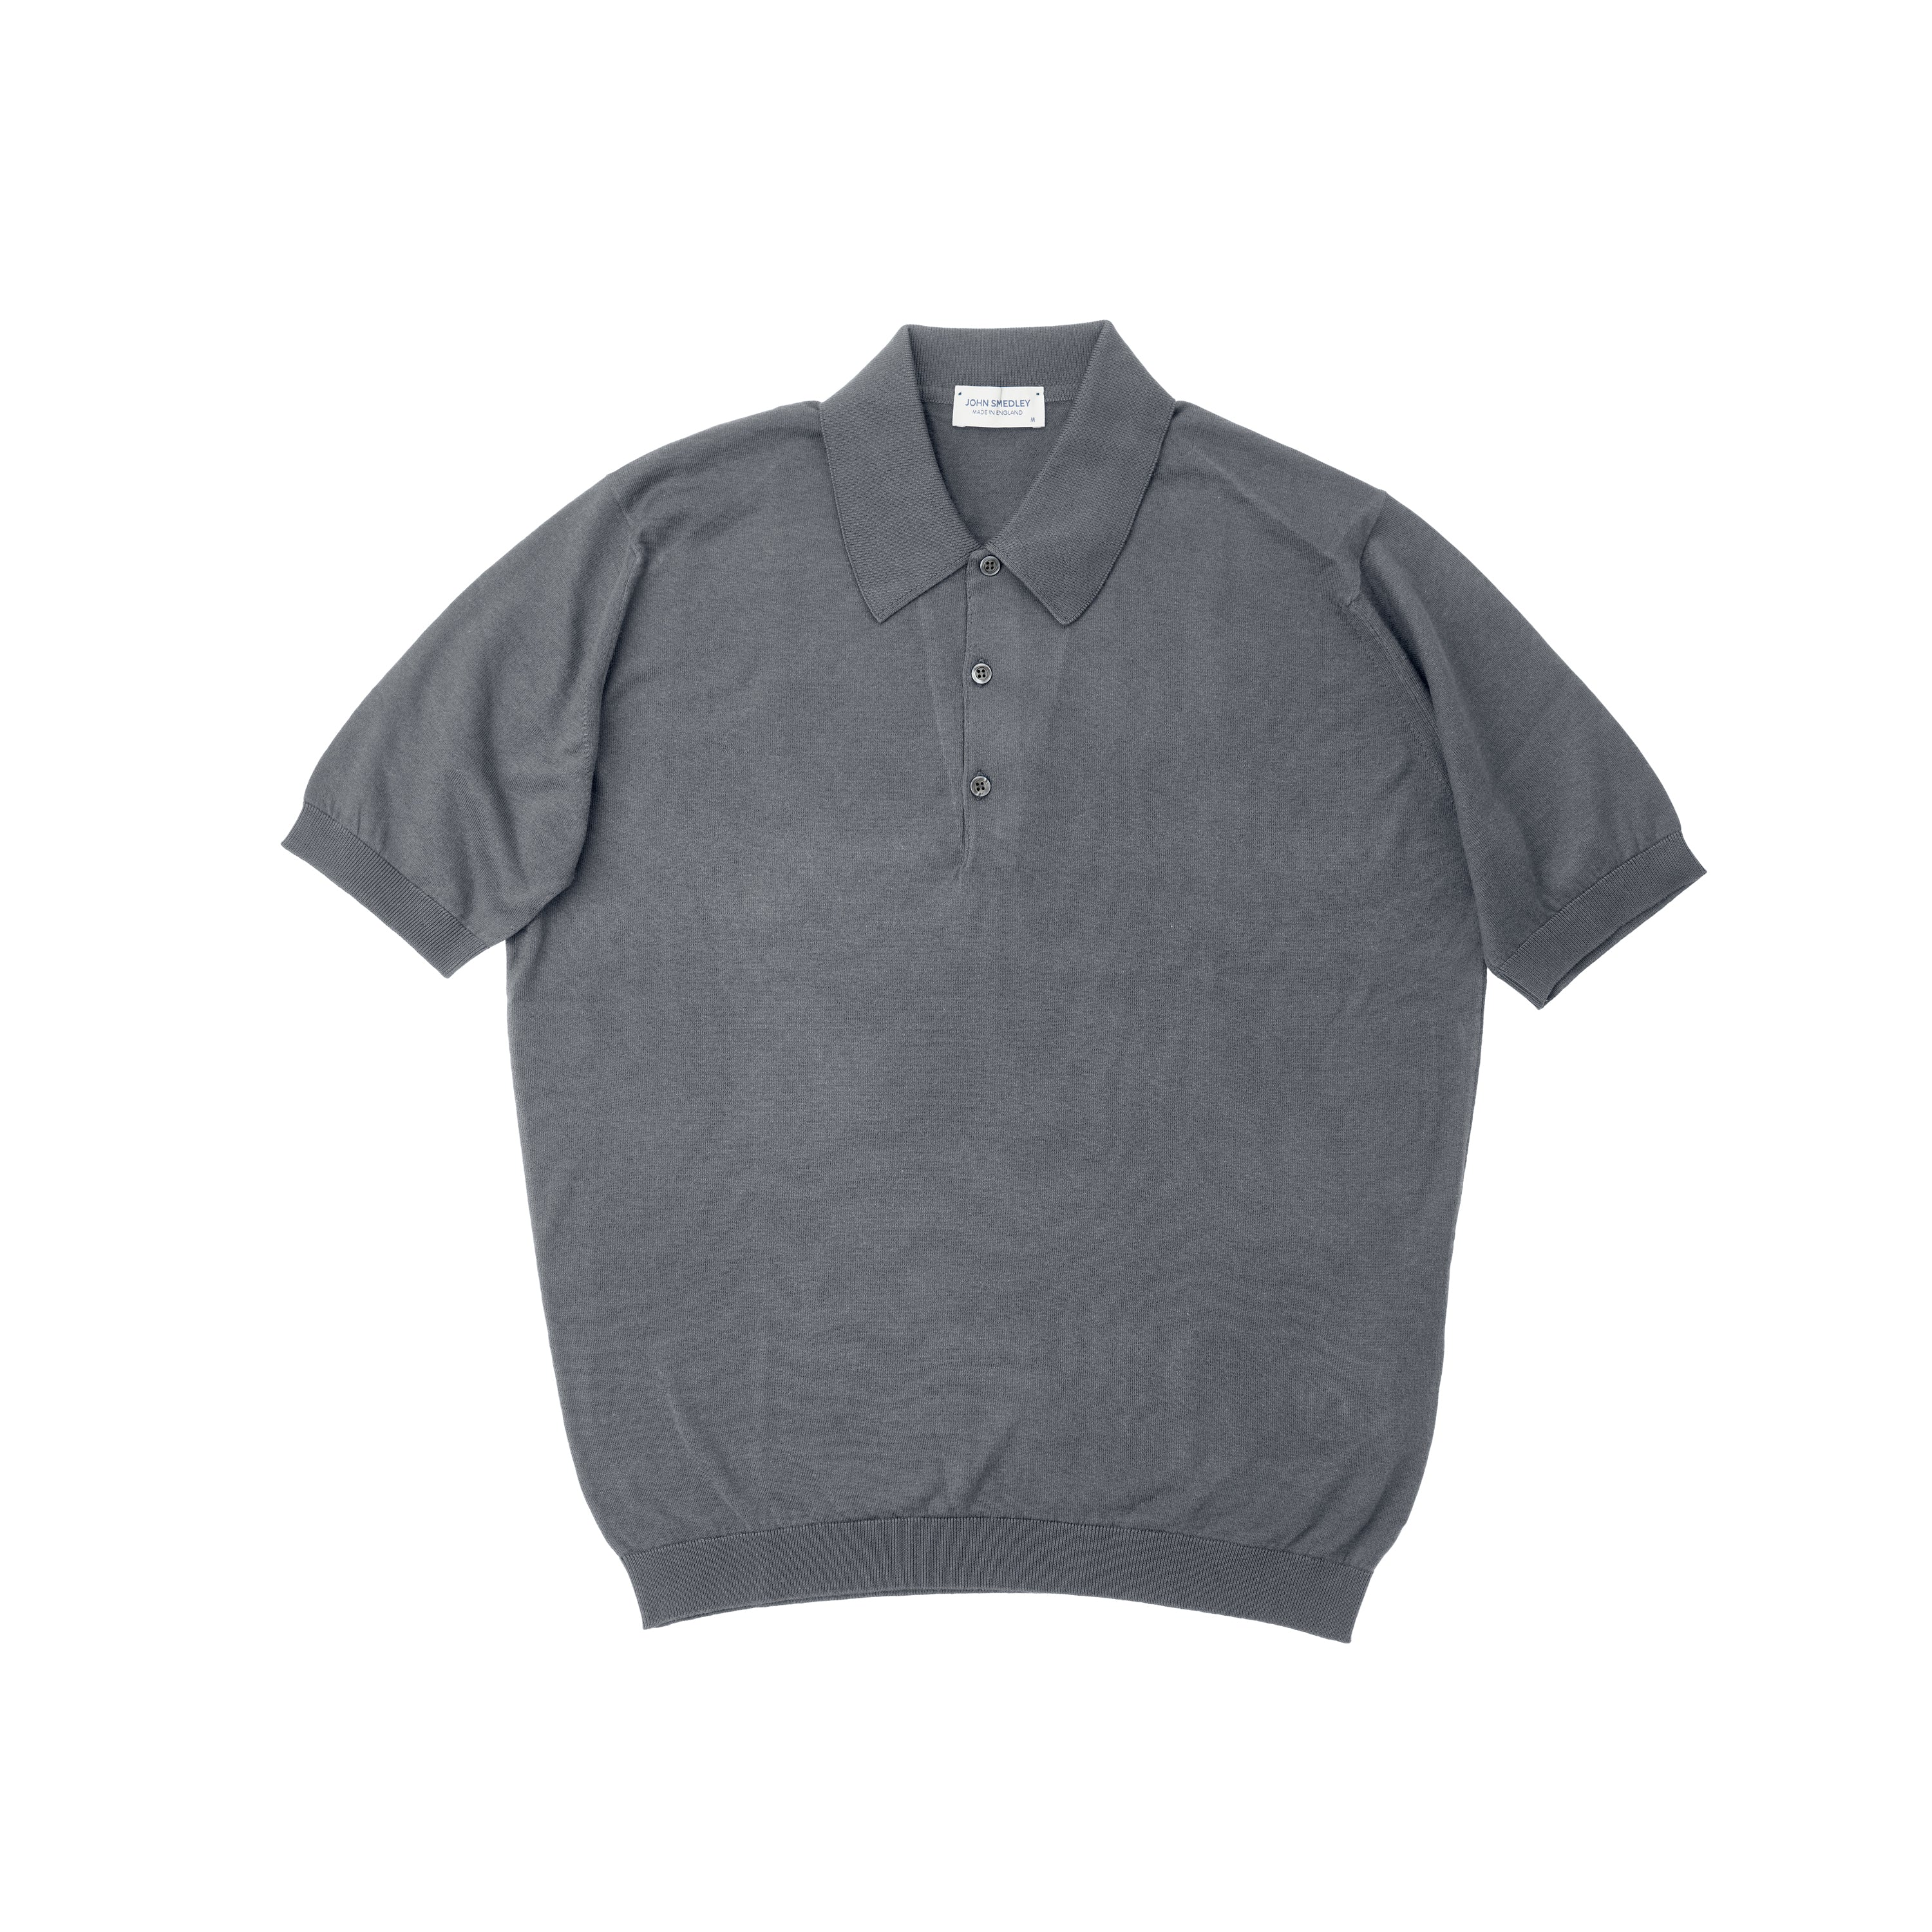 John Smedley Sea Island Cotton Charcoal Polo Shirt